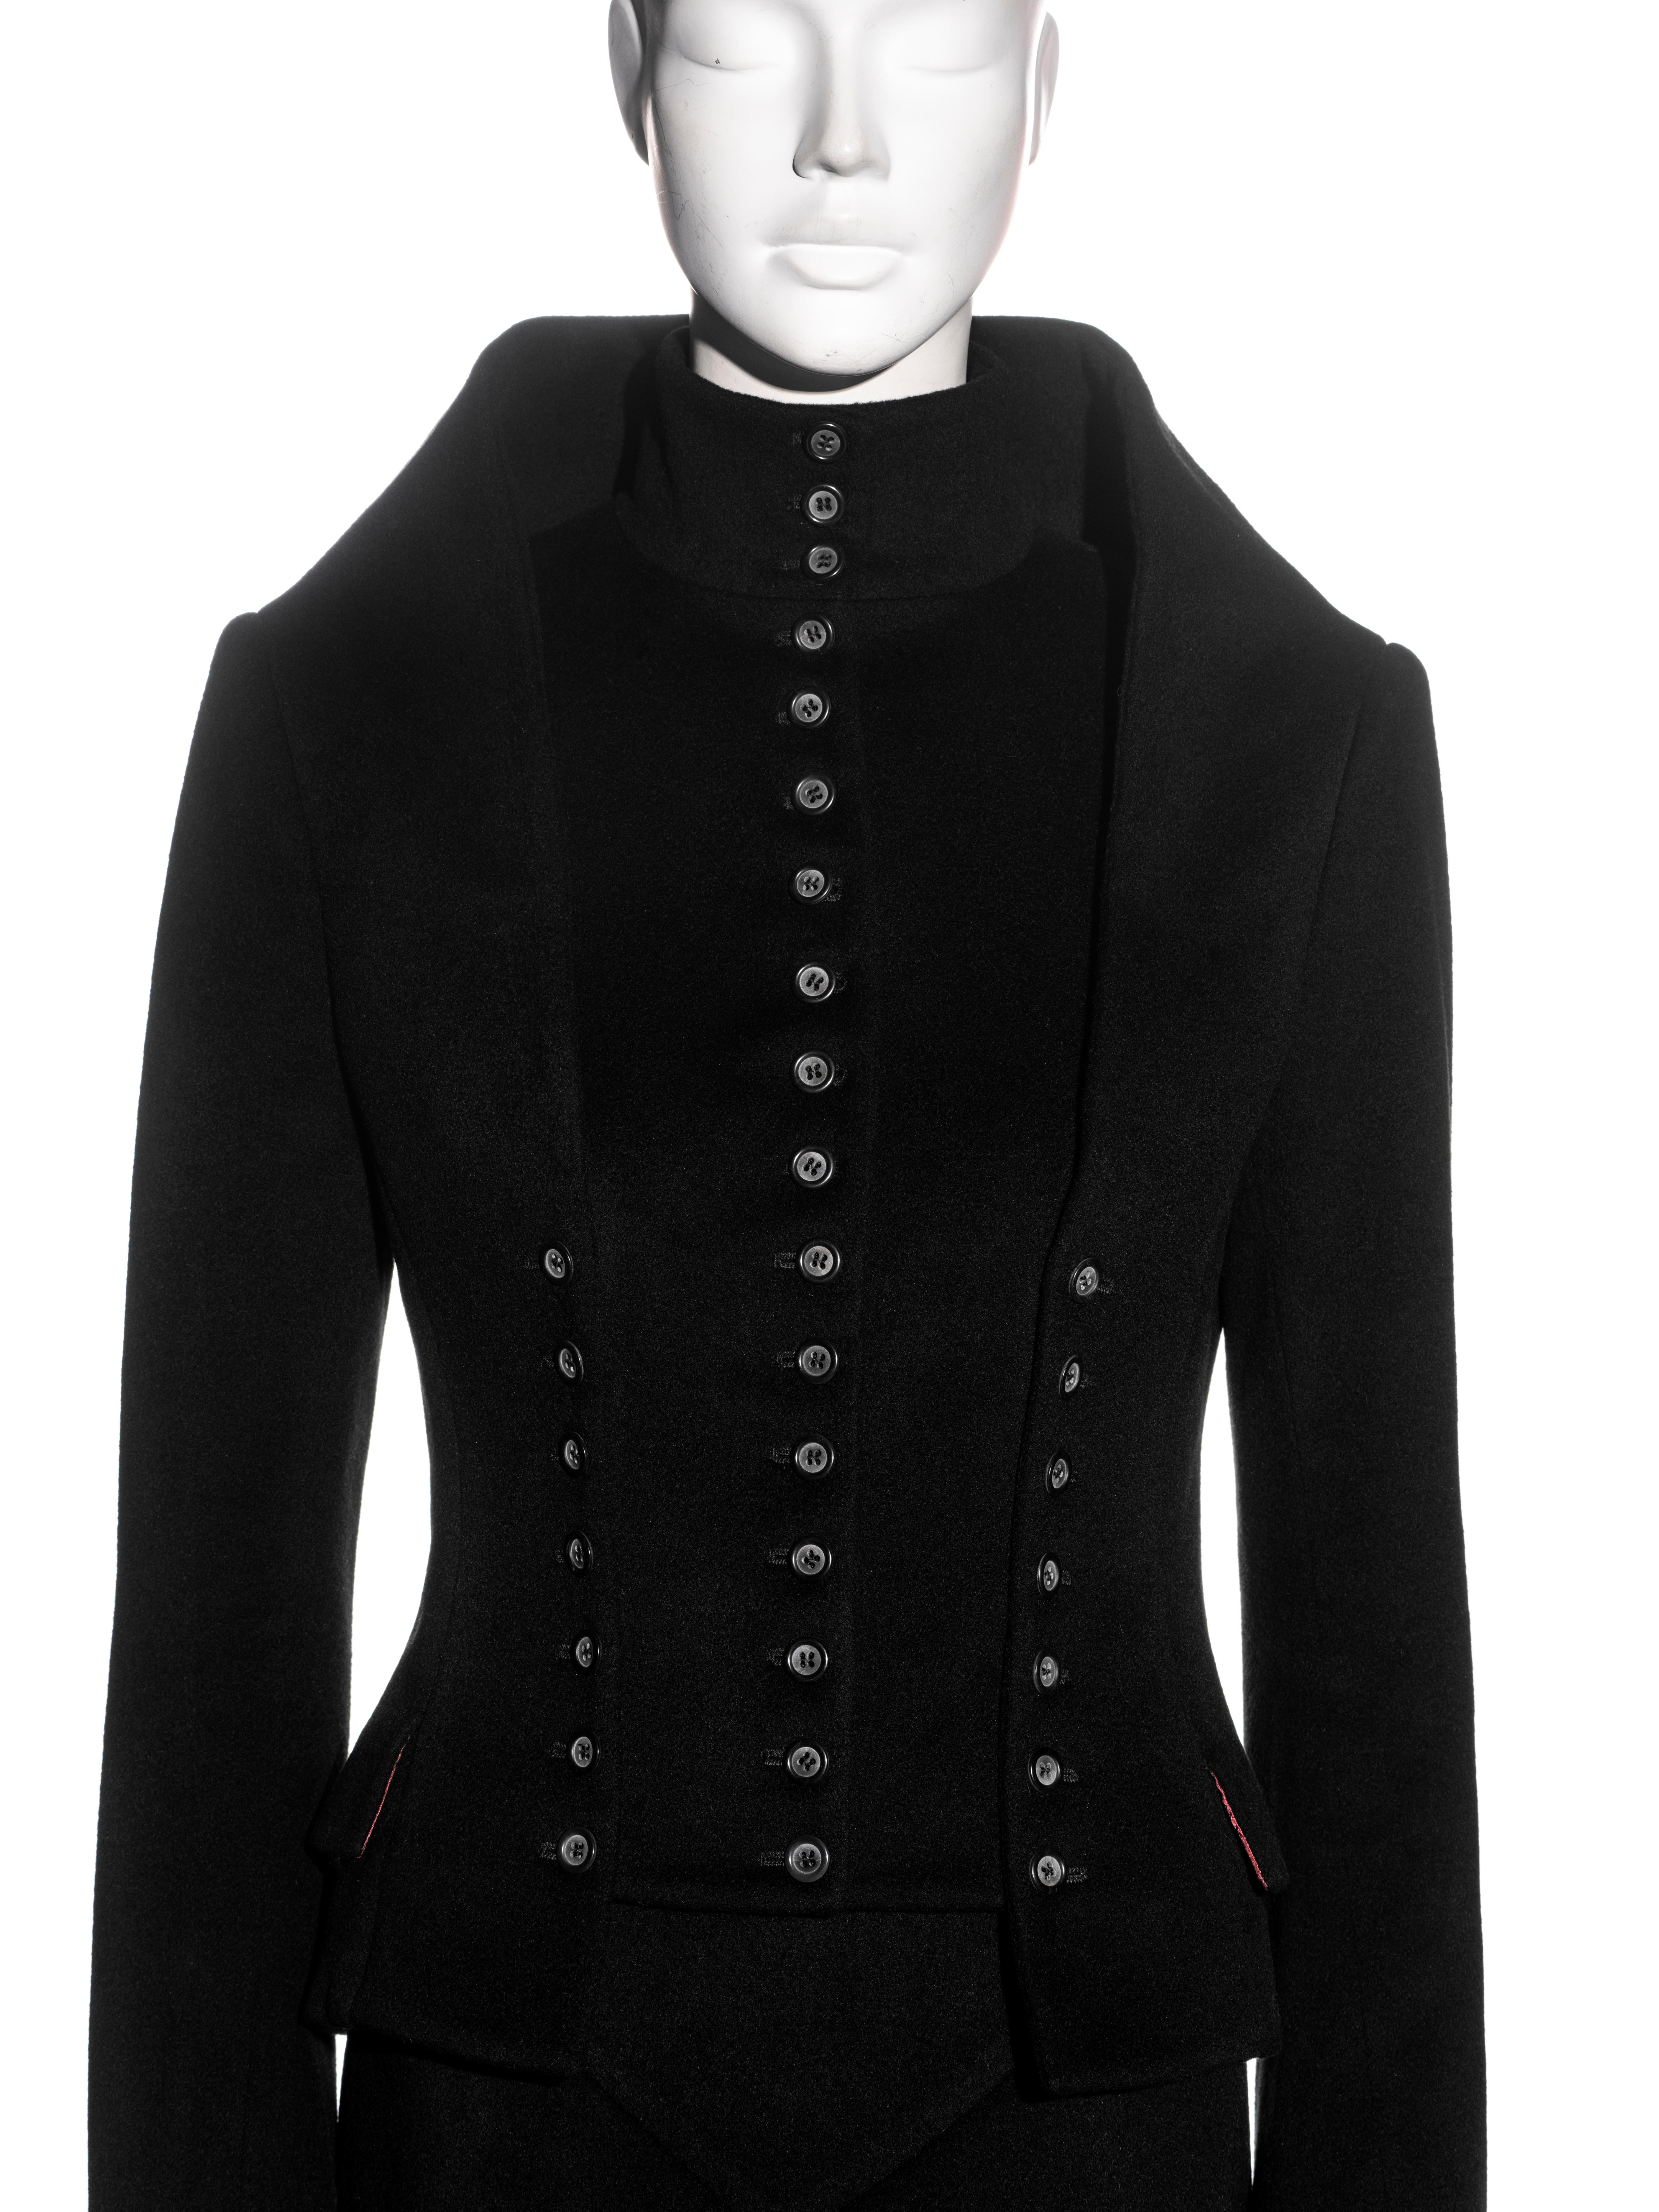 Black Alexander McQueen black cashmere 'Joan' jacket and skirt suit, fw 1998 For Sale